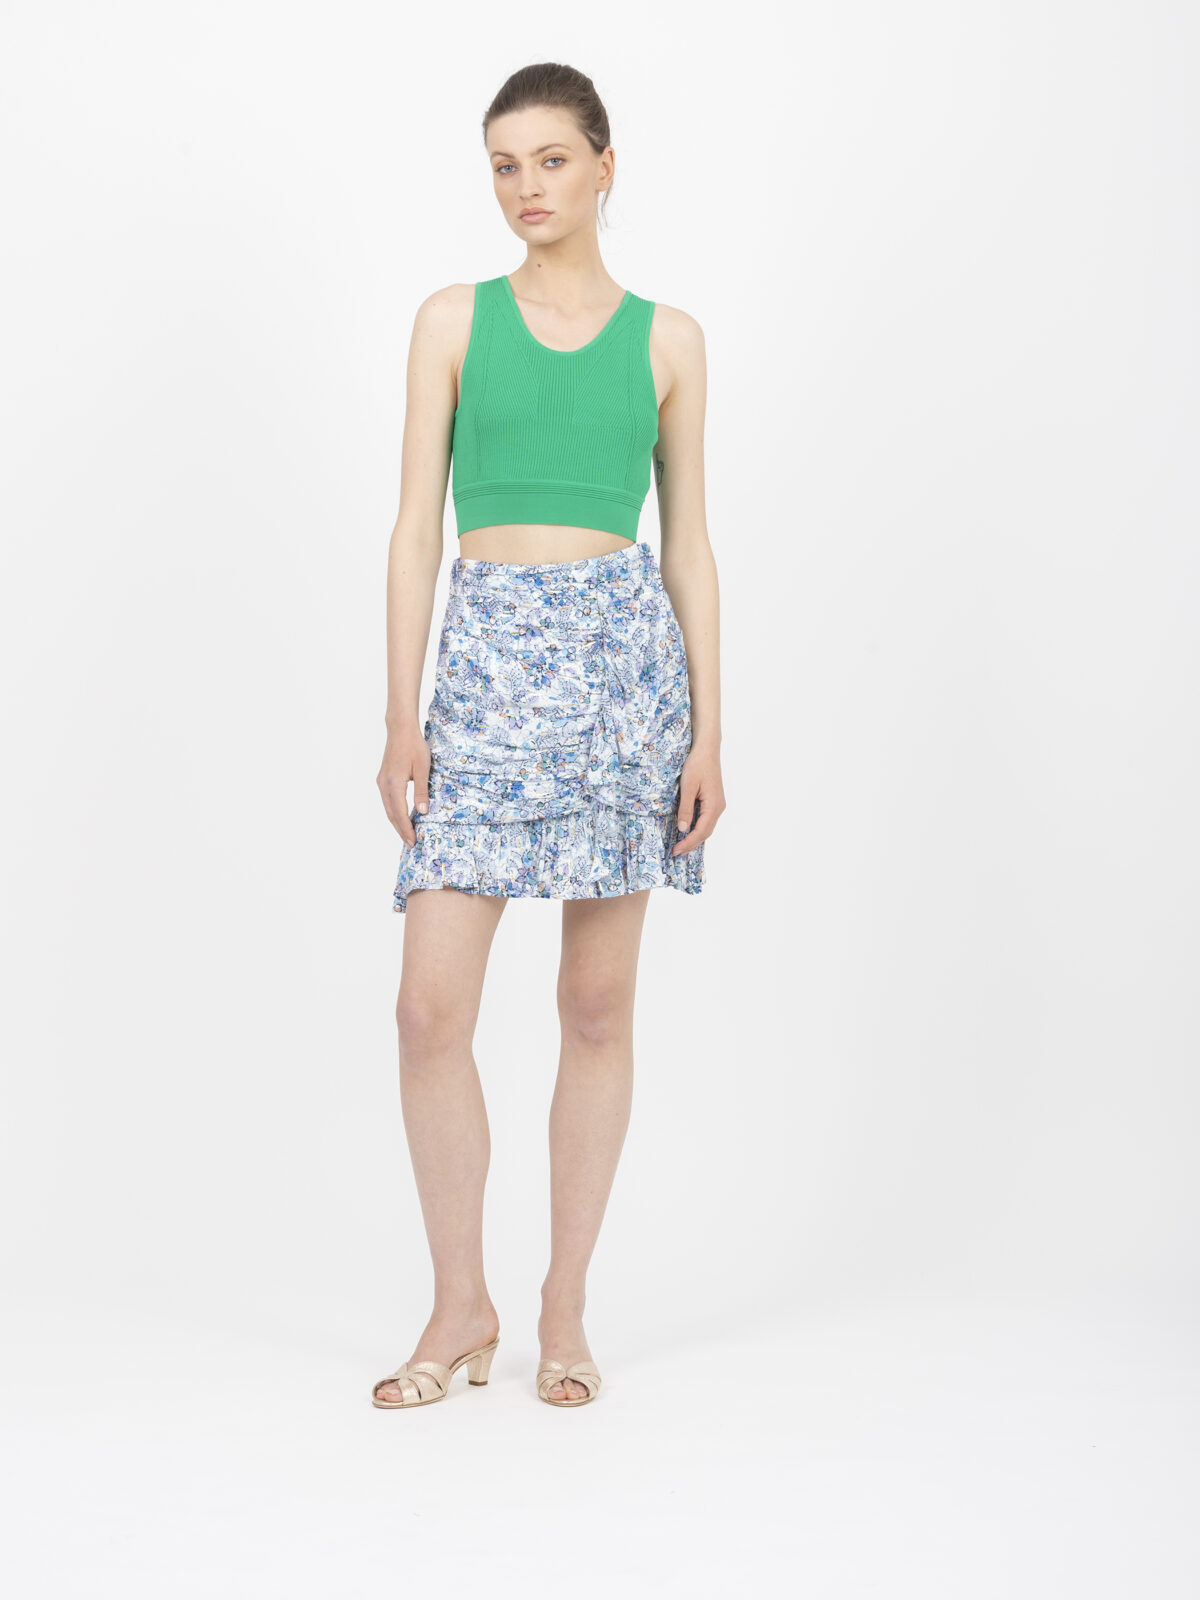 fauve-short-printed-skirt-ruffles-asymmetric-gathered-suncoo-lurex-matchboxathens